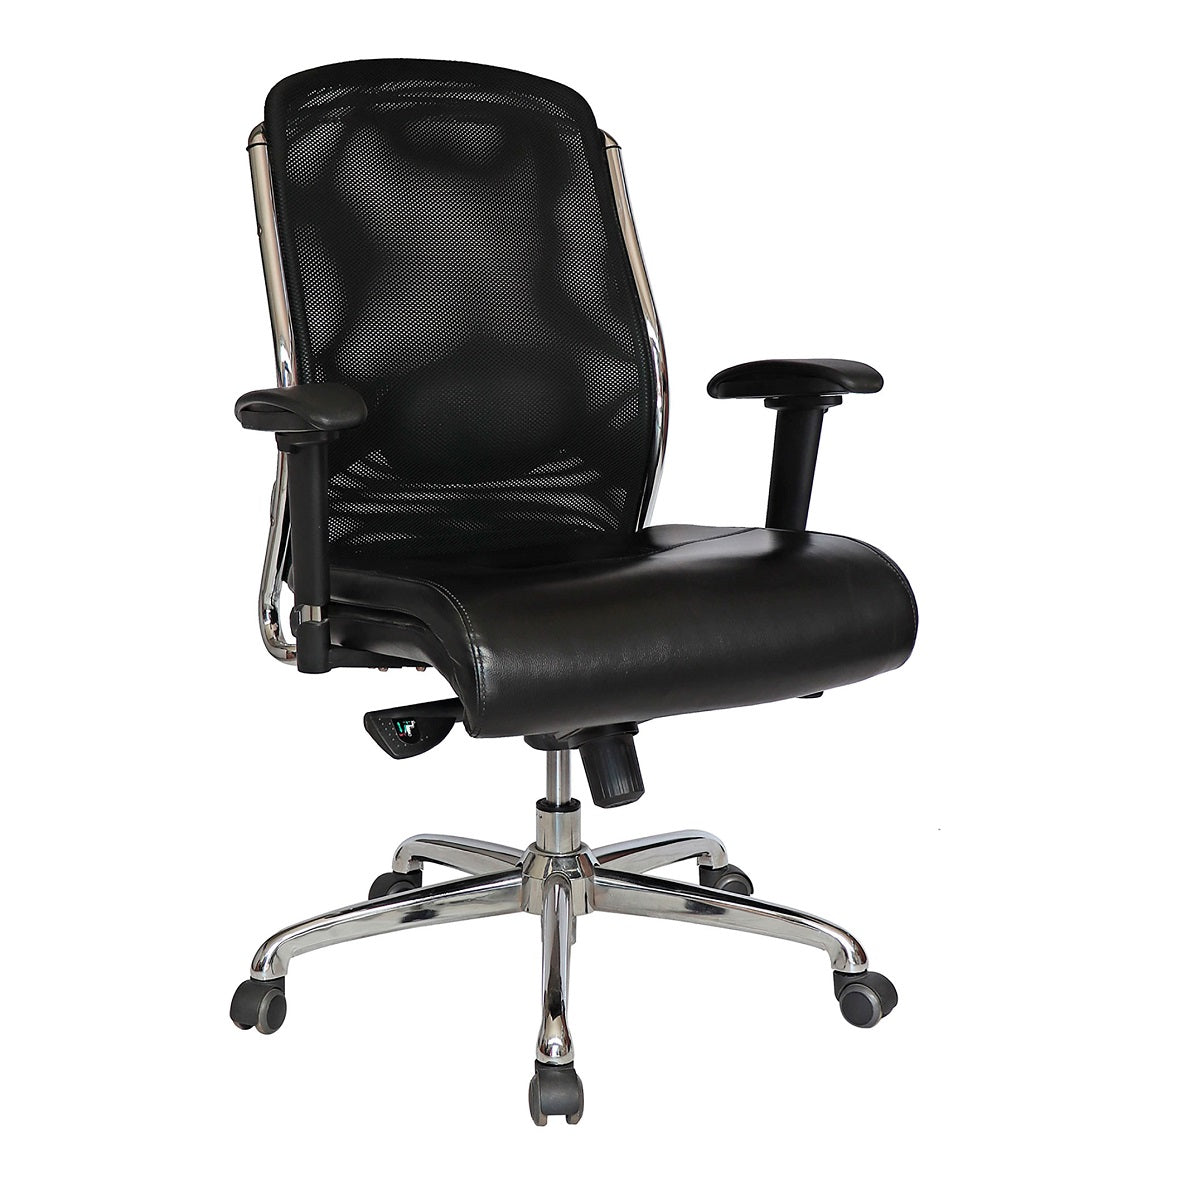 Sillón ejecutivo OHE-193 bajo respaldo tapizado en malla y asiento en tela negro con base cromo